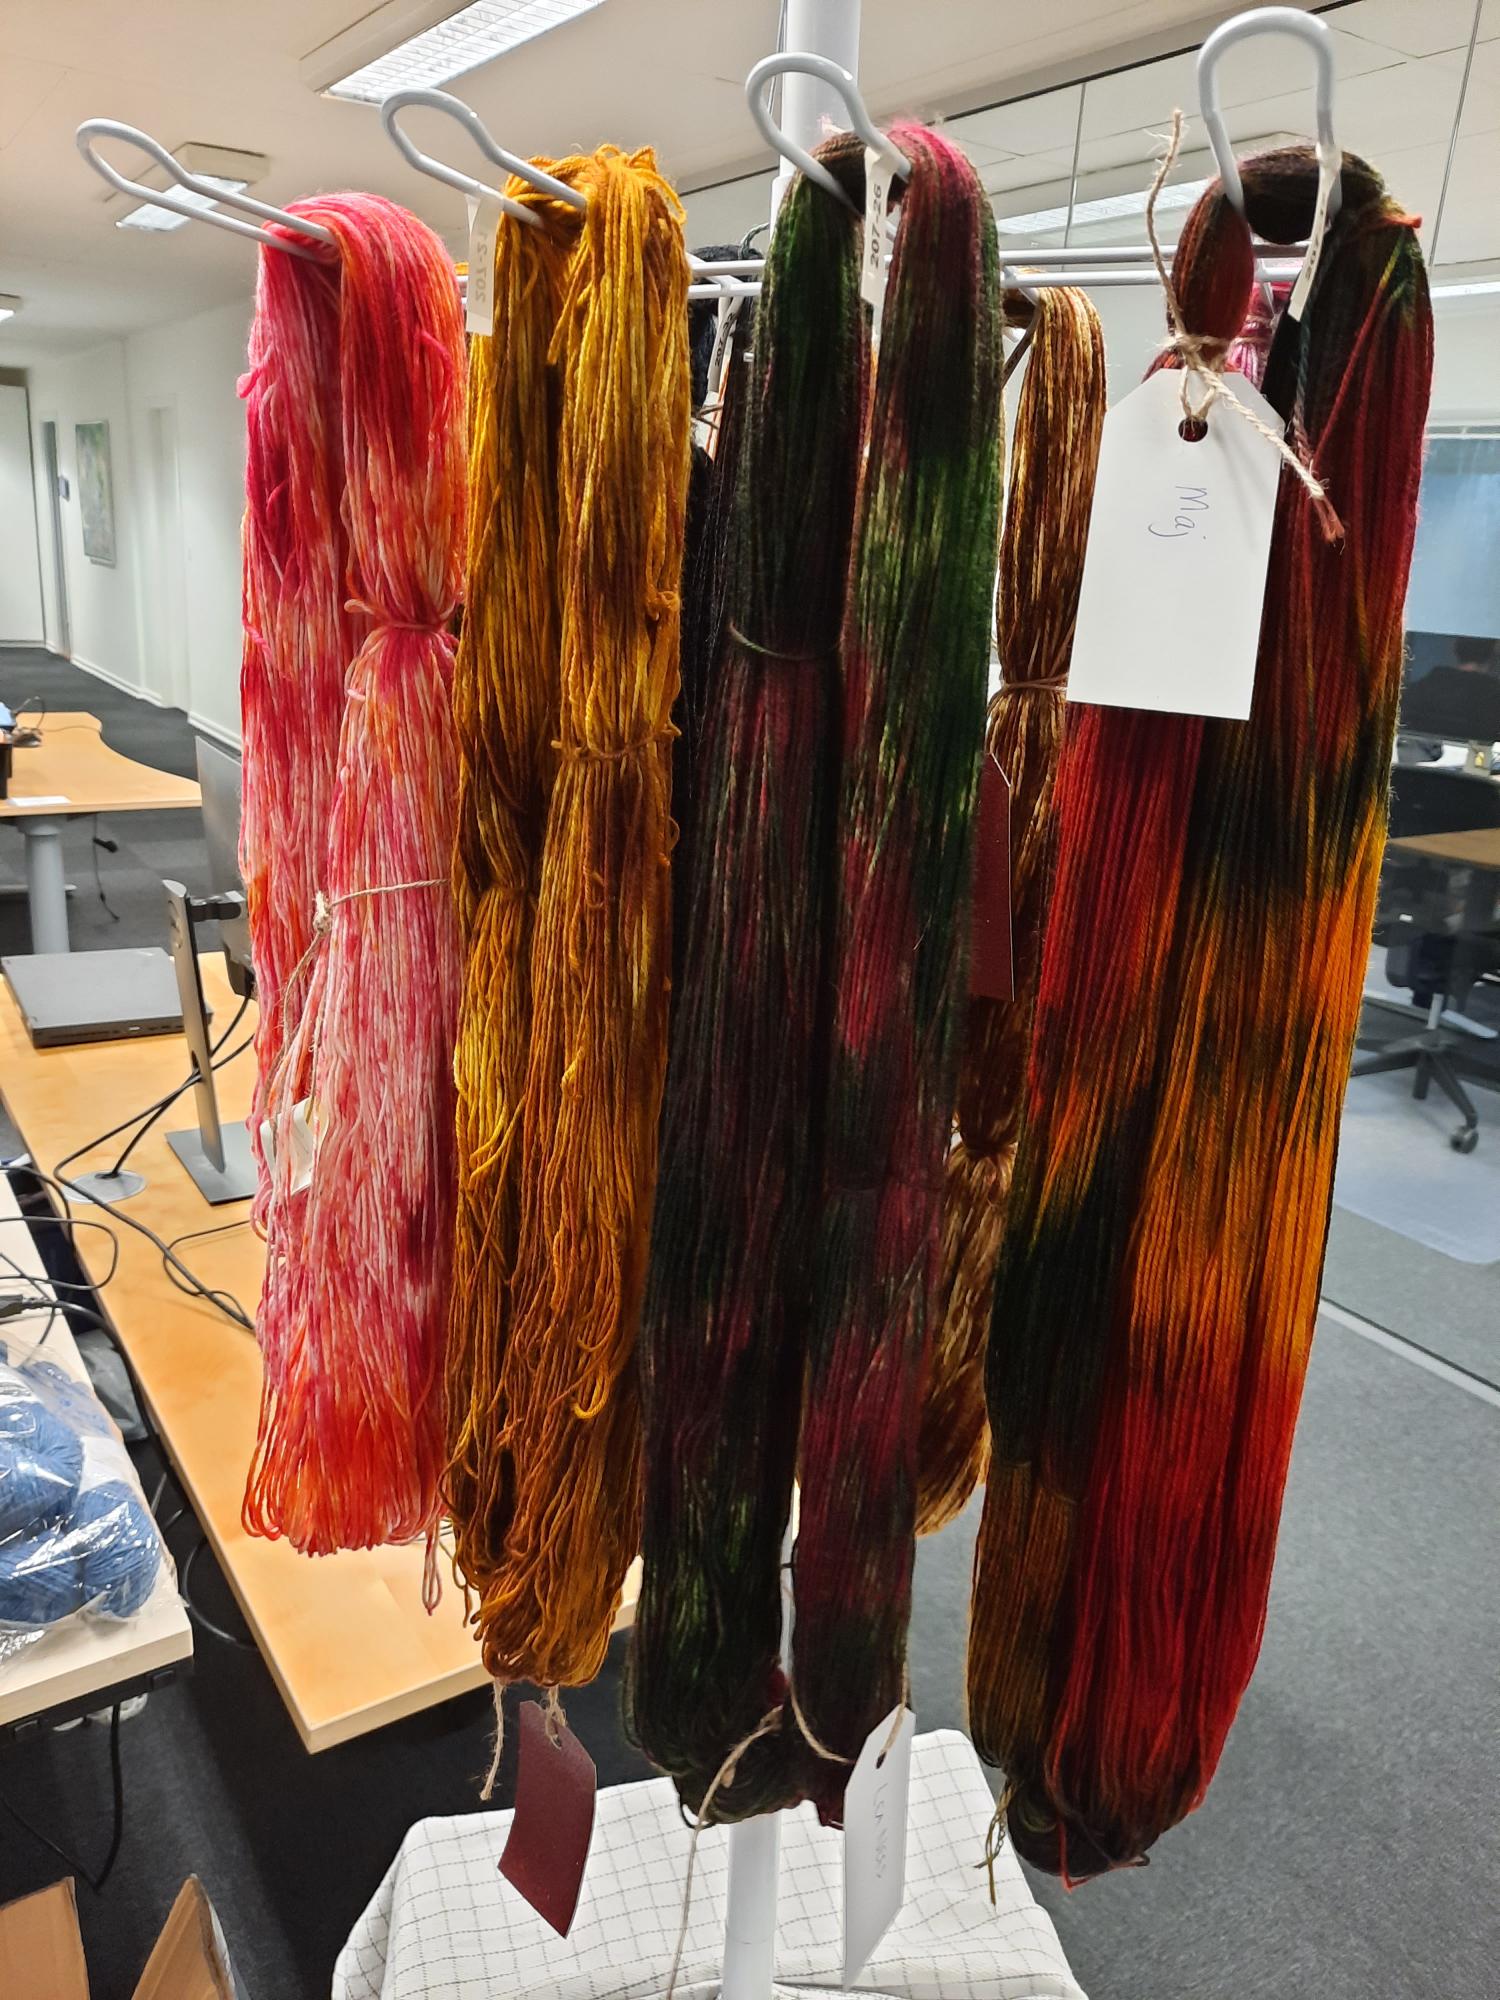 Learn to dye yarn: How to hand-dye your own yarn